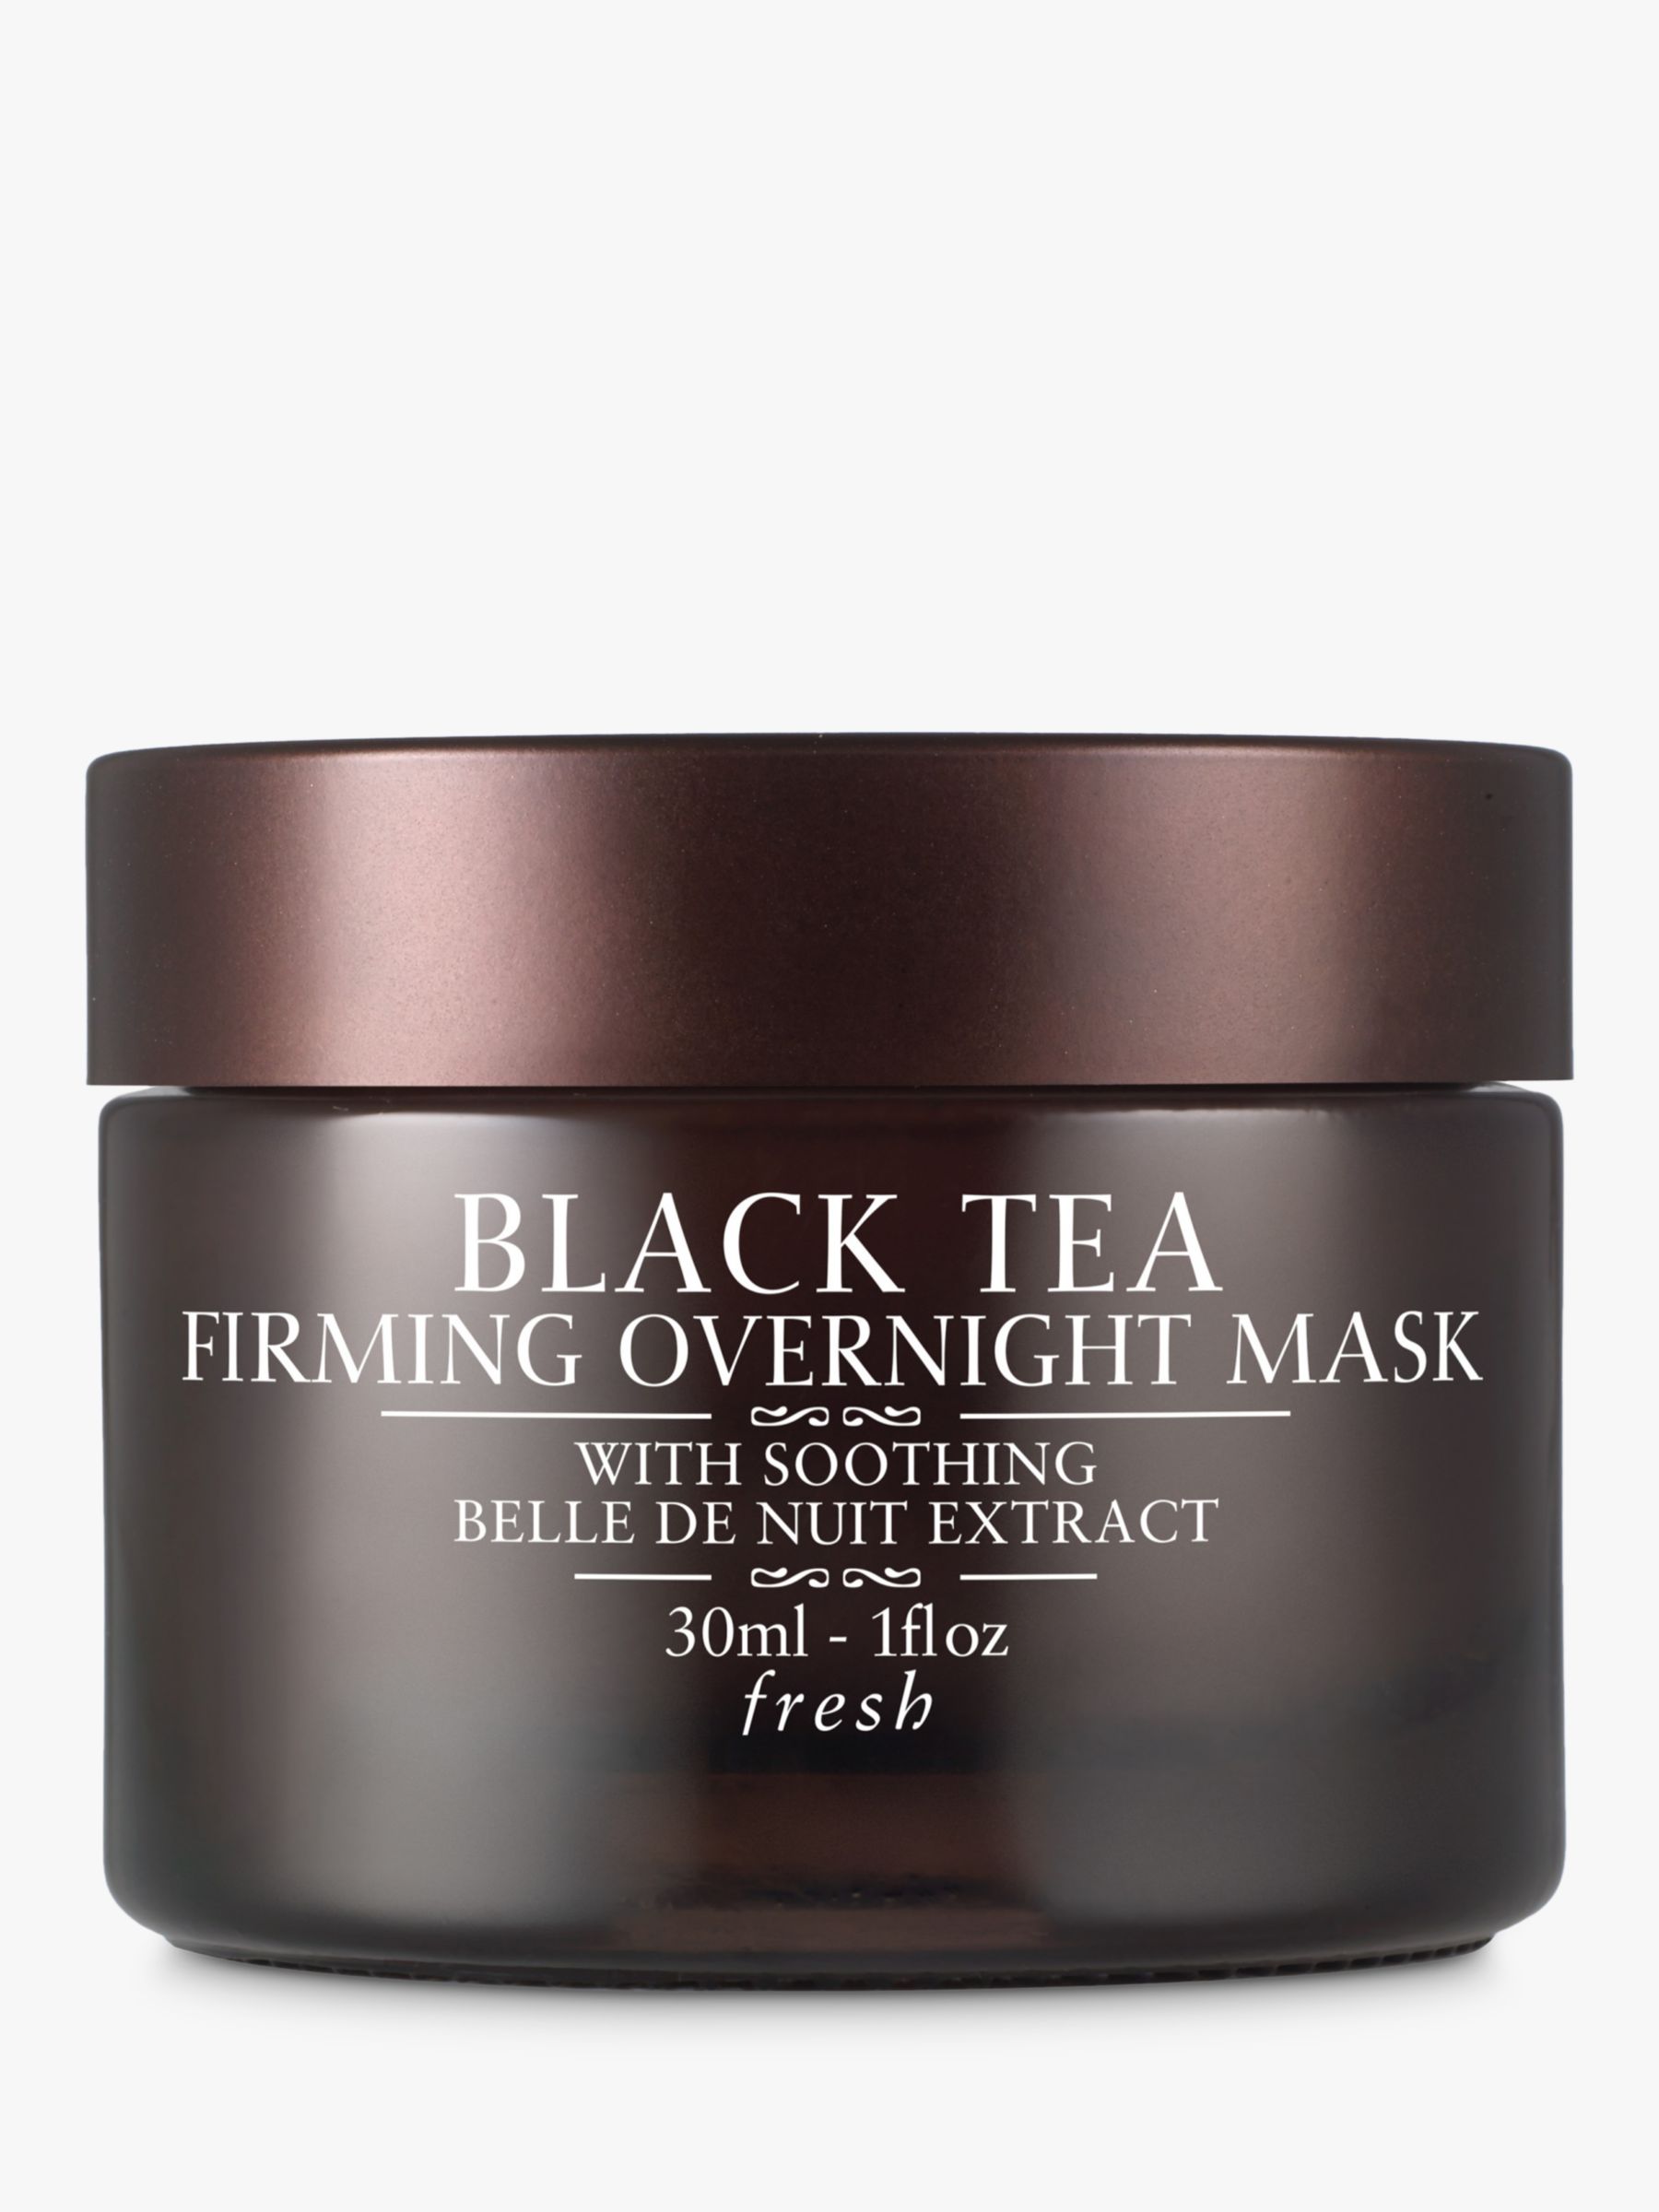 Fresh Black Tea Firming Overnight Mask, 30ml 2